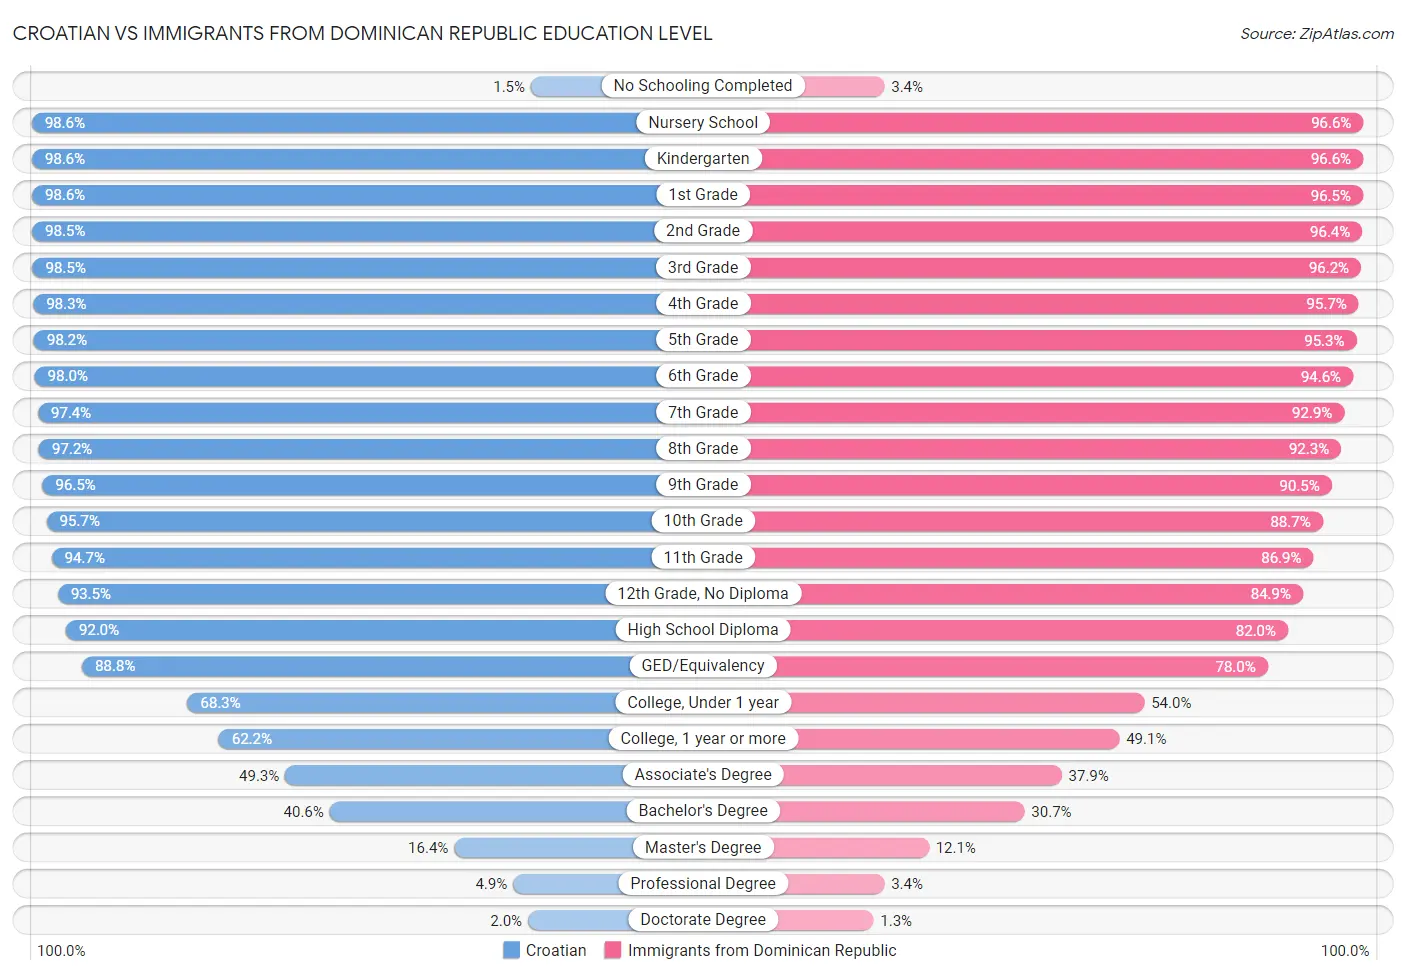 Croatian vs Immigrants from Dominican Republic Education Level